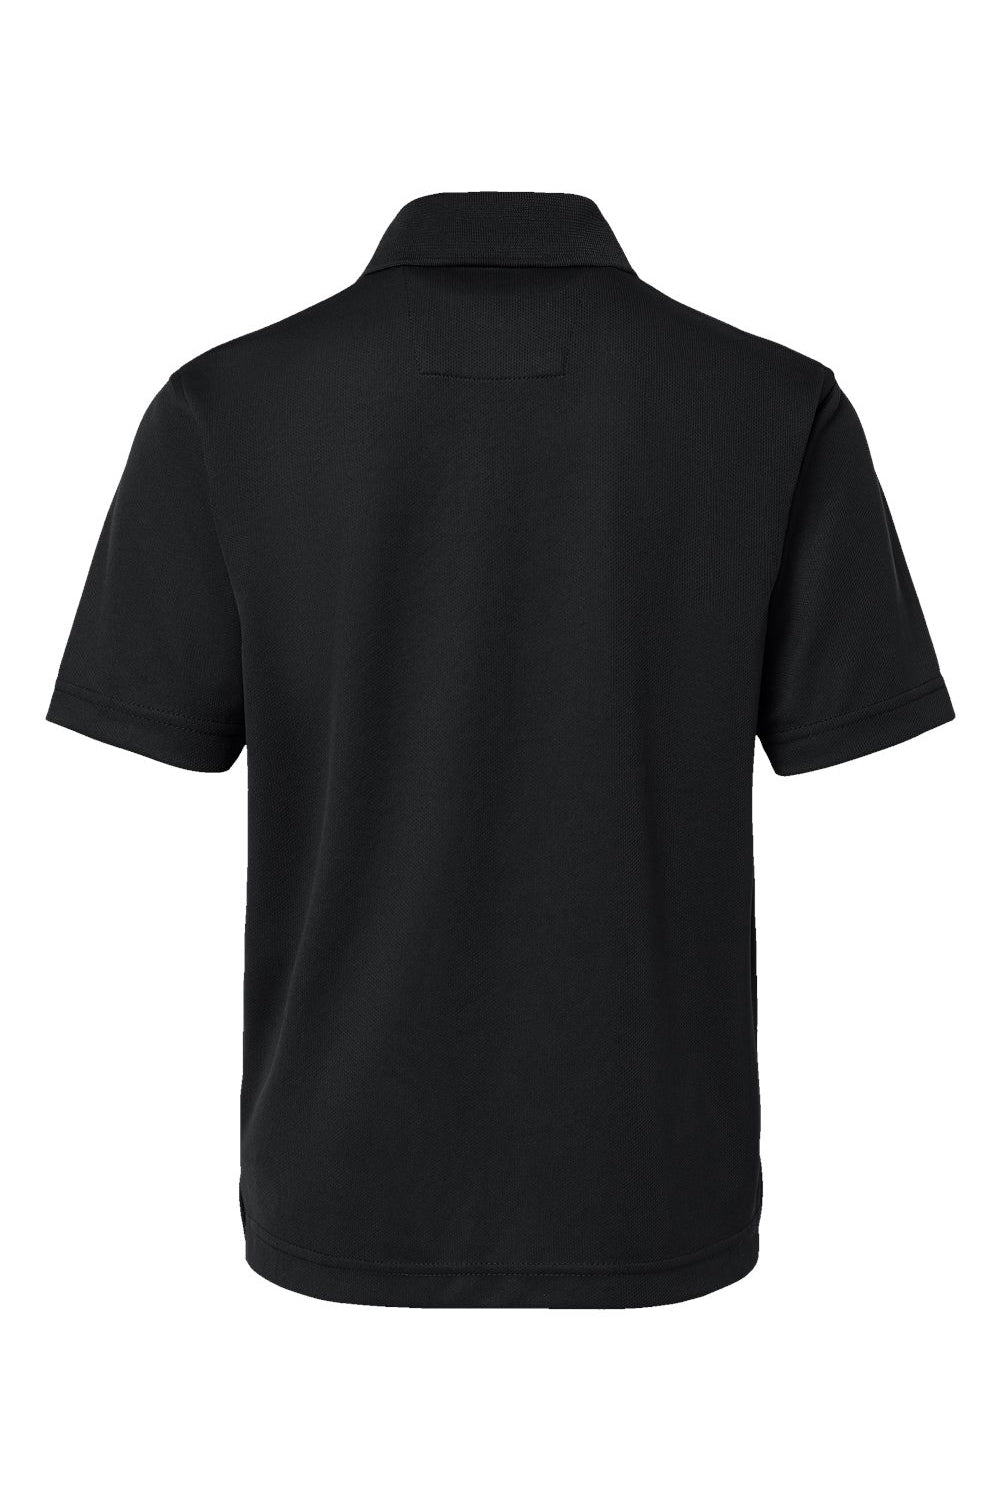 Paragon 108Y Youth Saratoga Performance Mini Mesh Short Sleeve Polo Shirt Black Flat Back